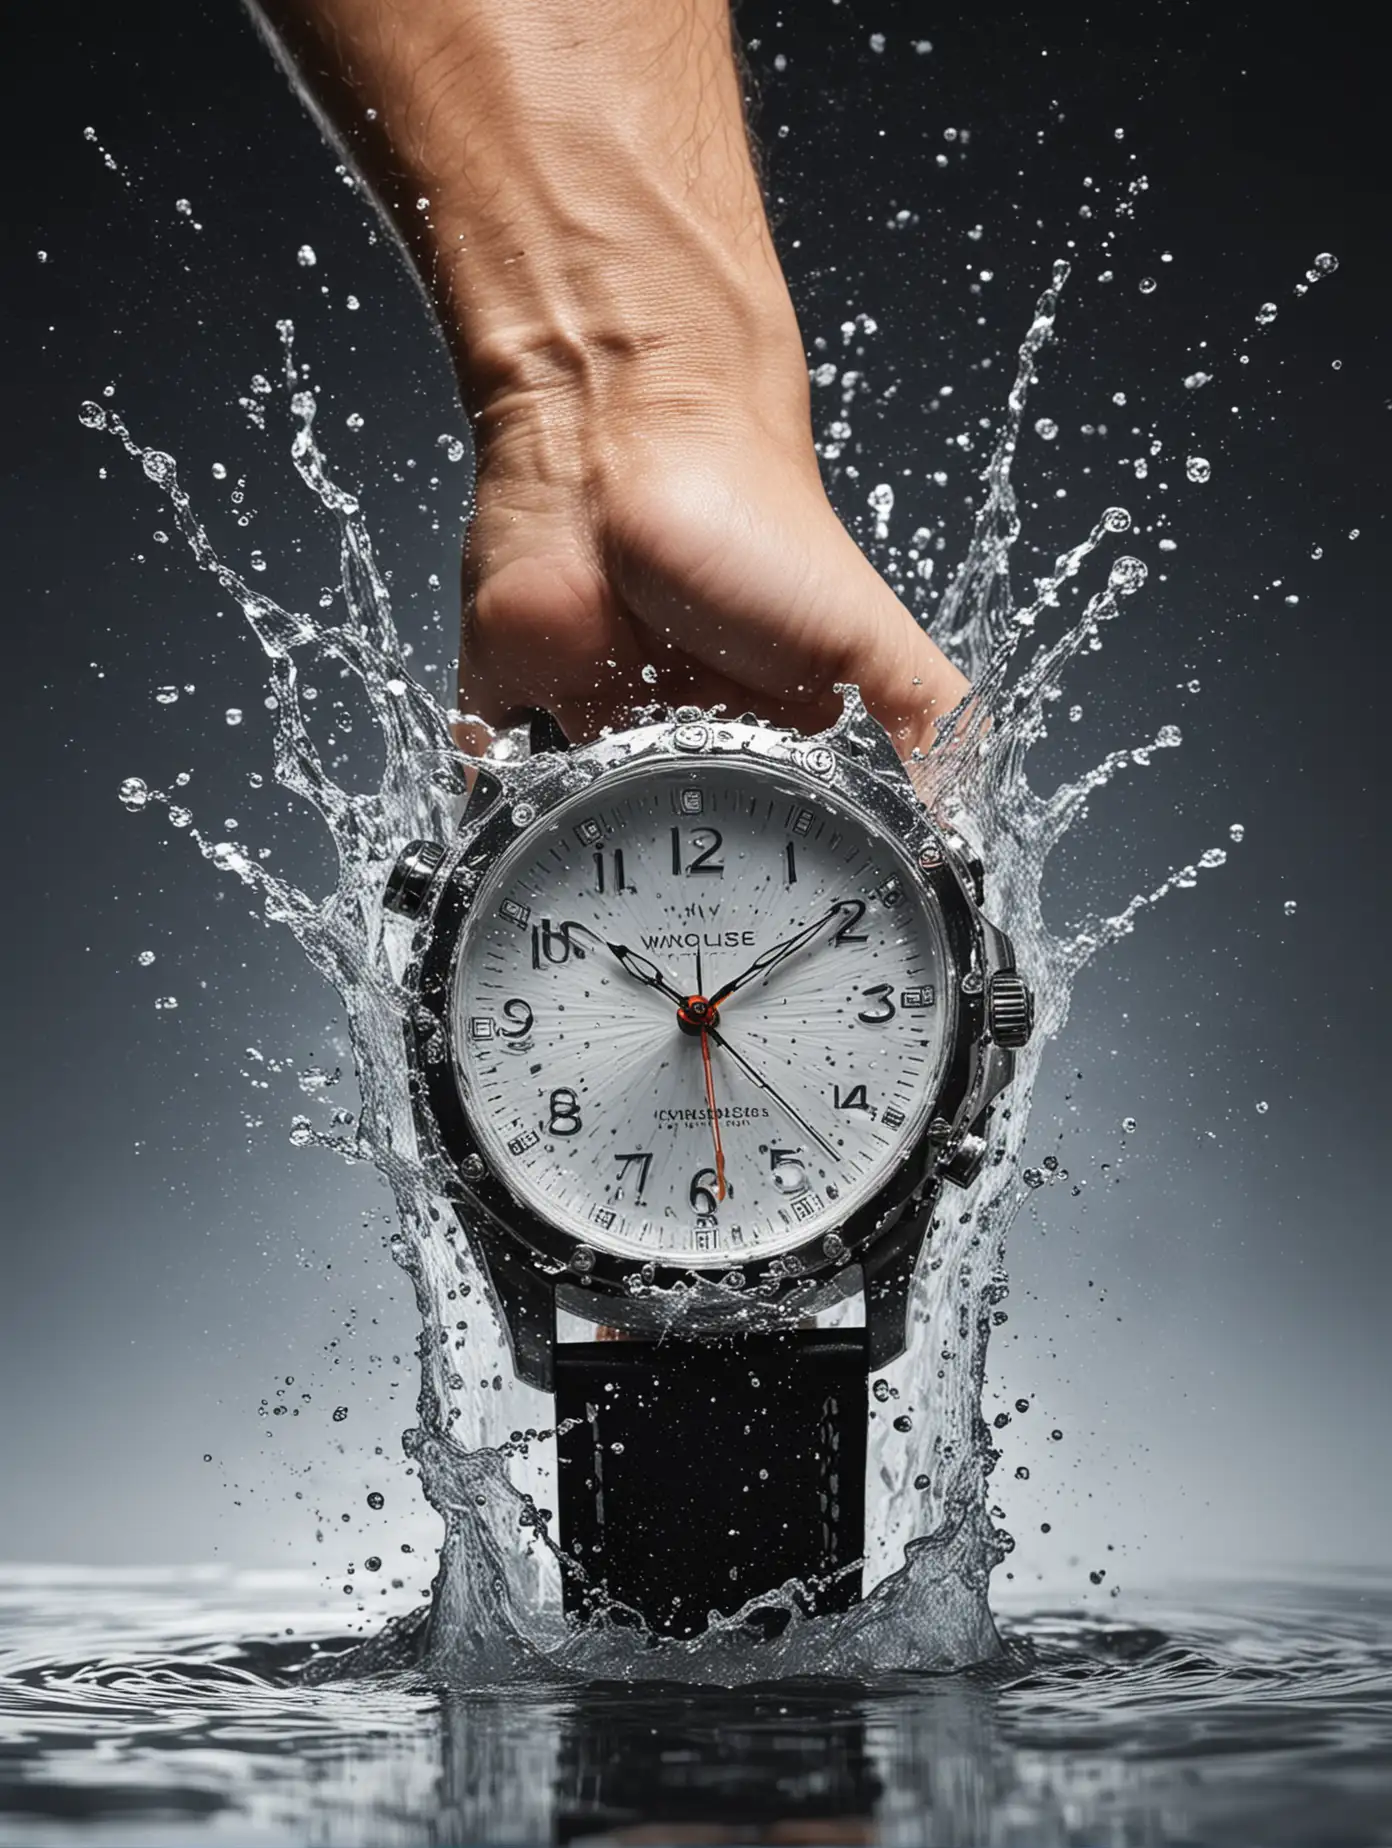 Dynamic Water Splash Surrounding a Wrist Watch